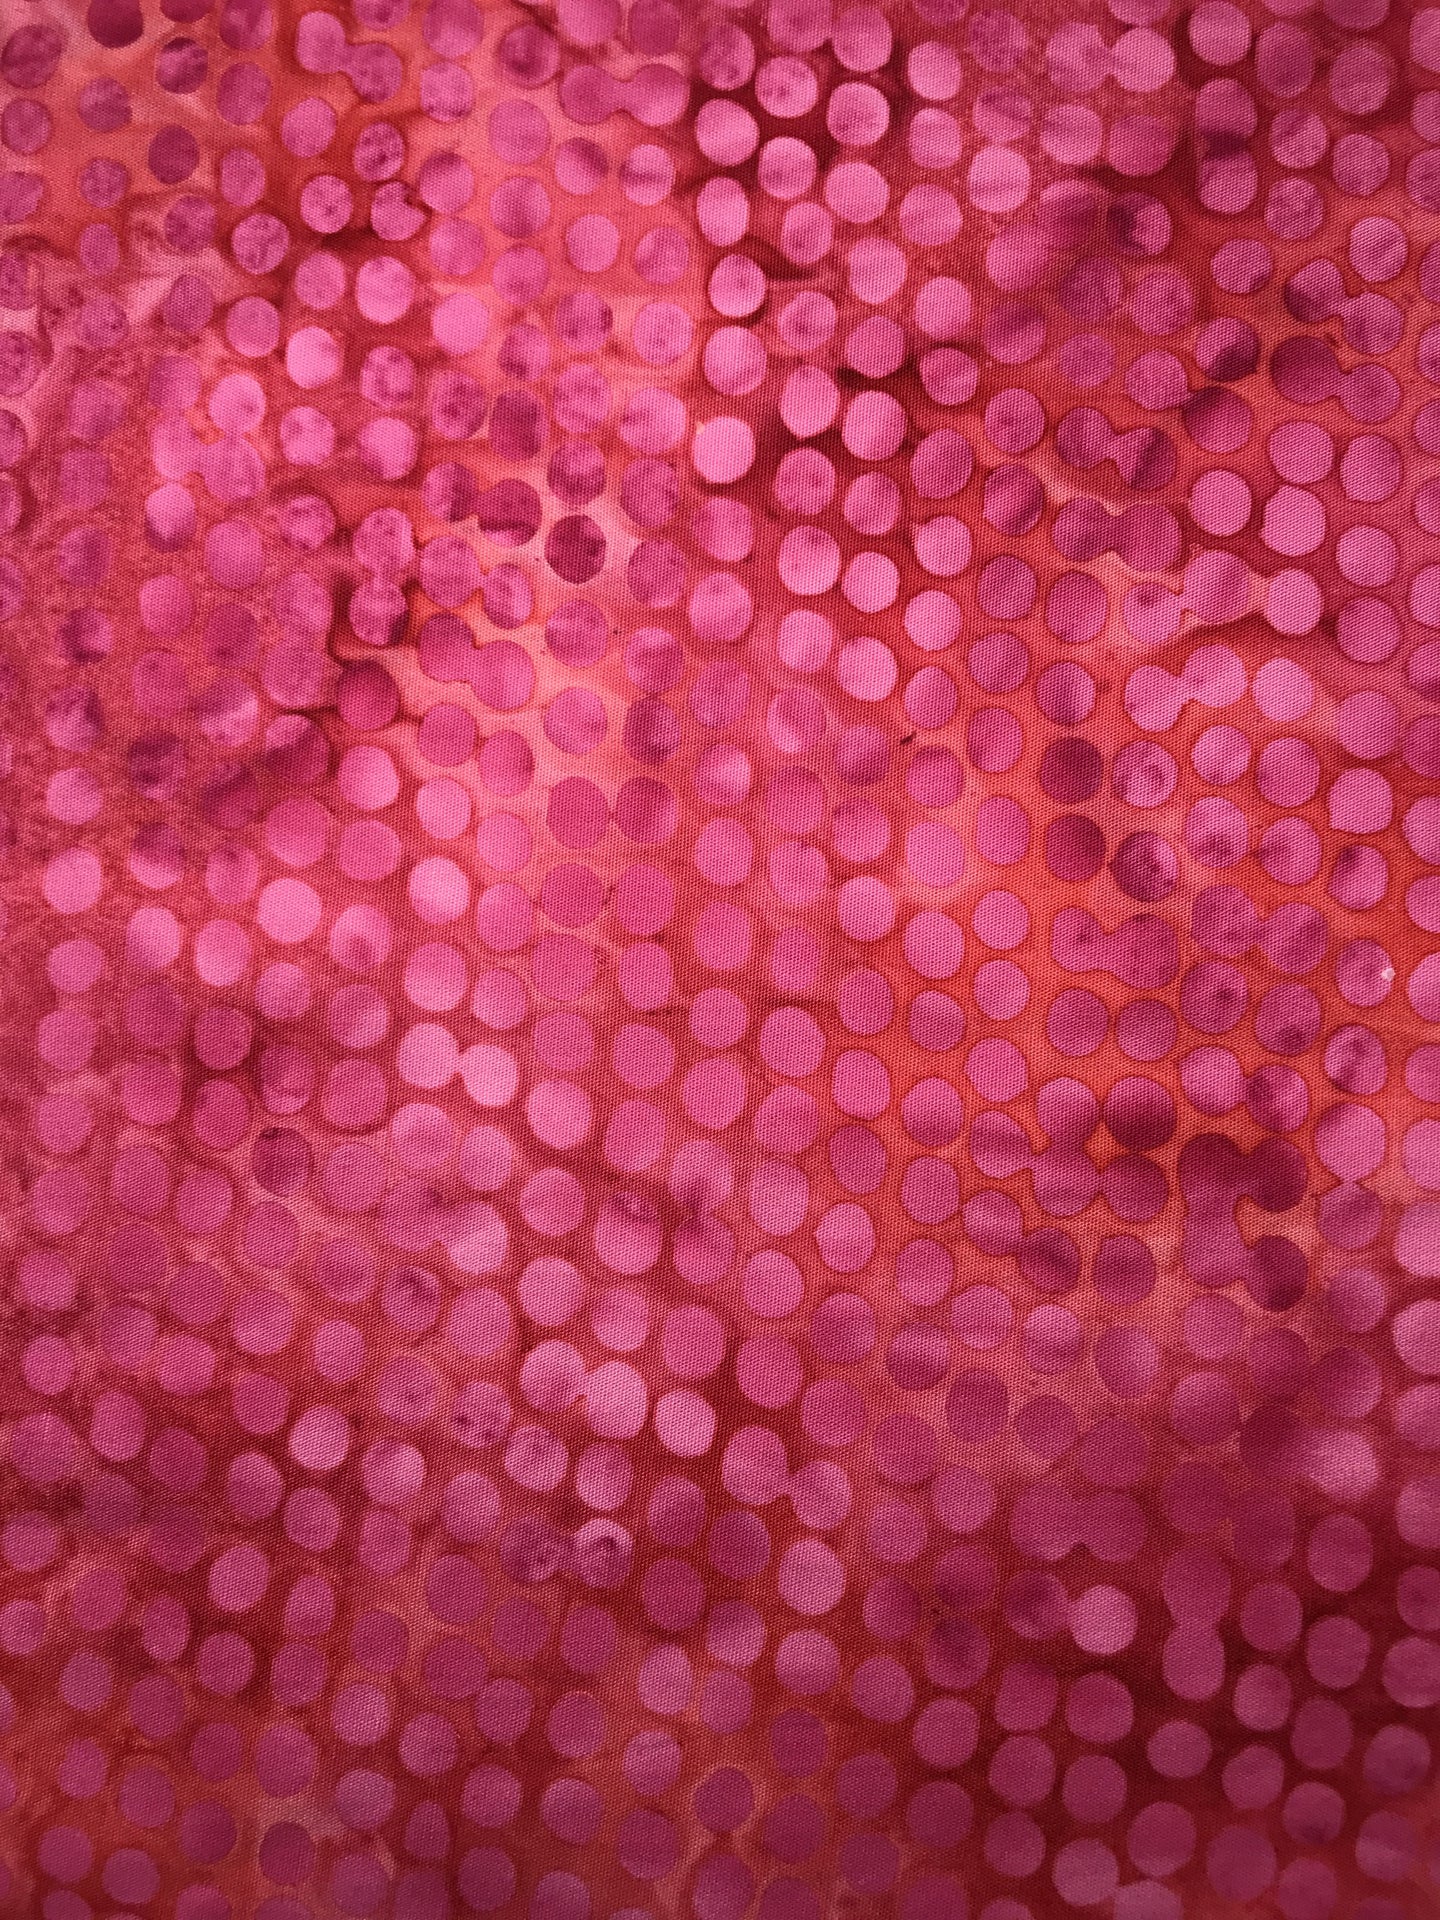 Island Batik (1117112325 - Dot - Hot Pink) Hot Pink